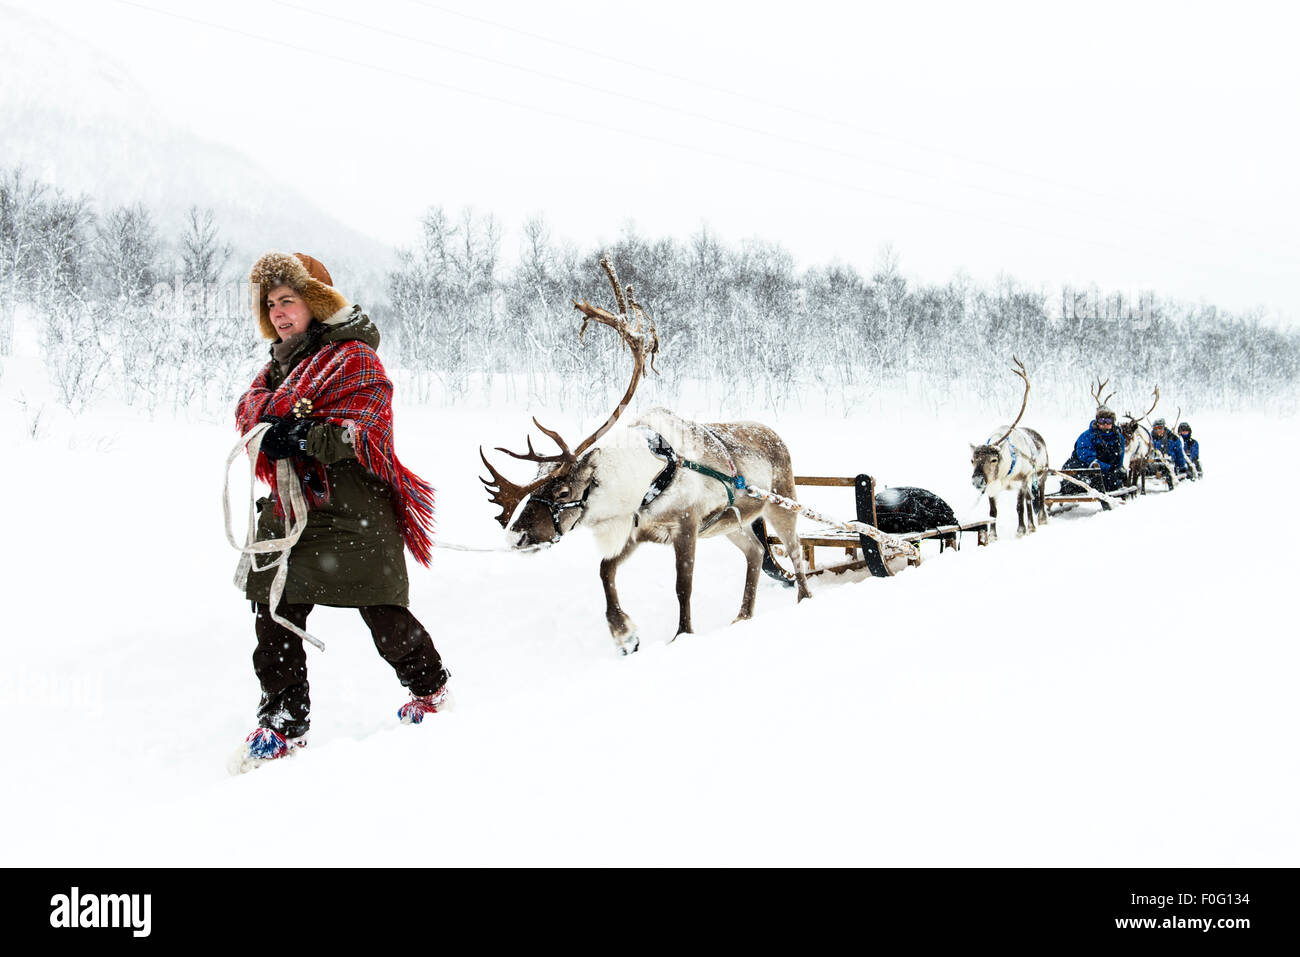 Sami reindeer herder leading reindeer sledding Camp Tamok Lapland Norway Scandinavia Stock Photo